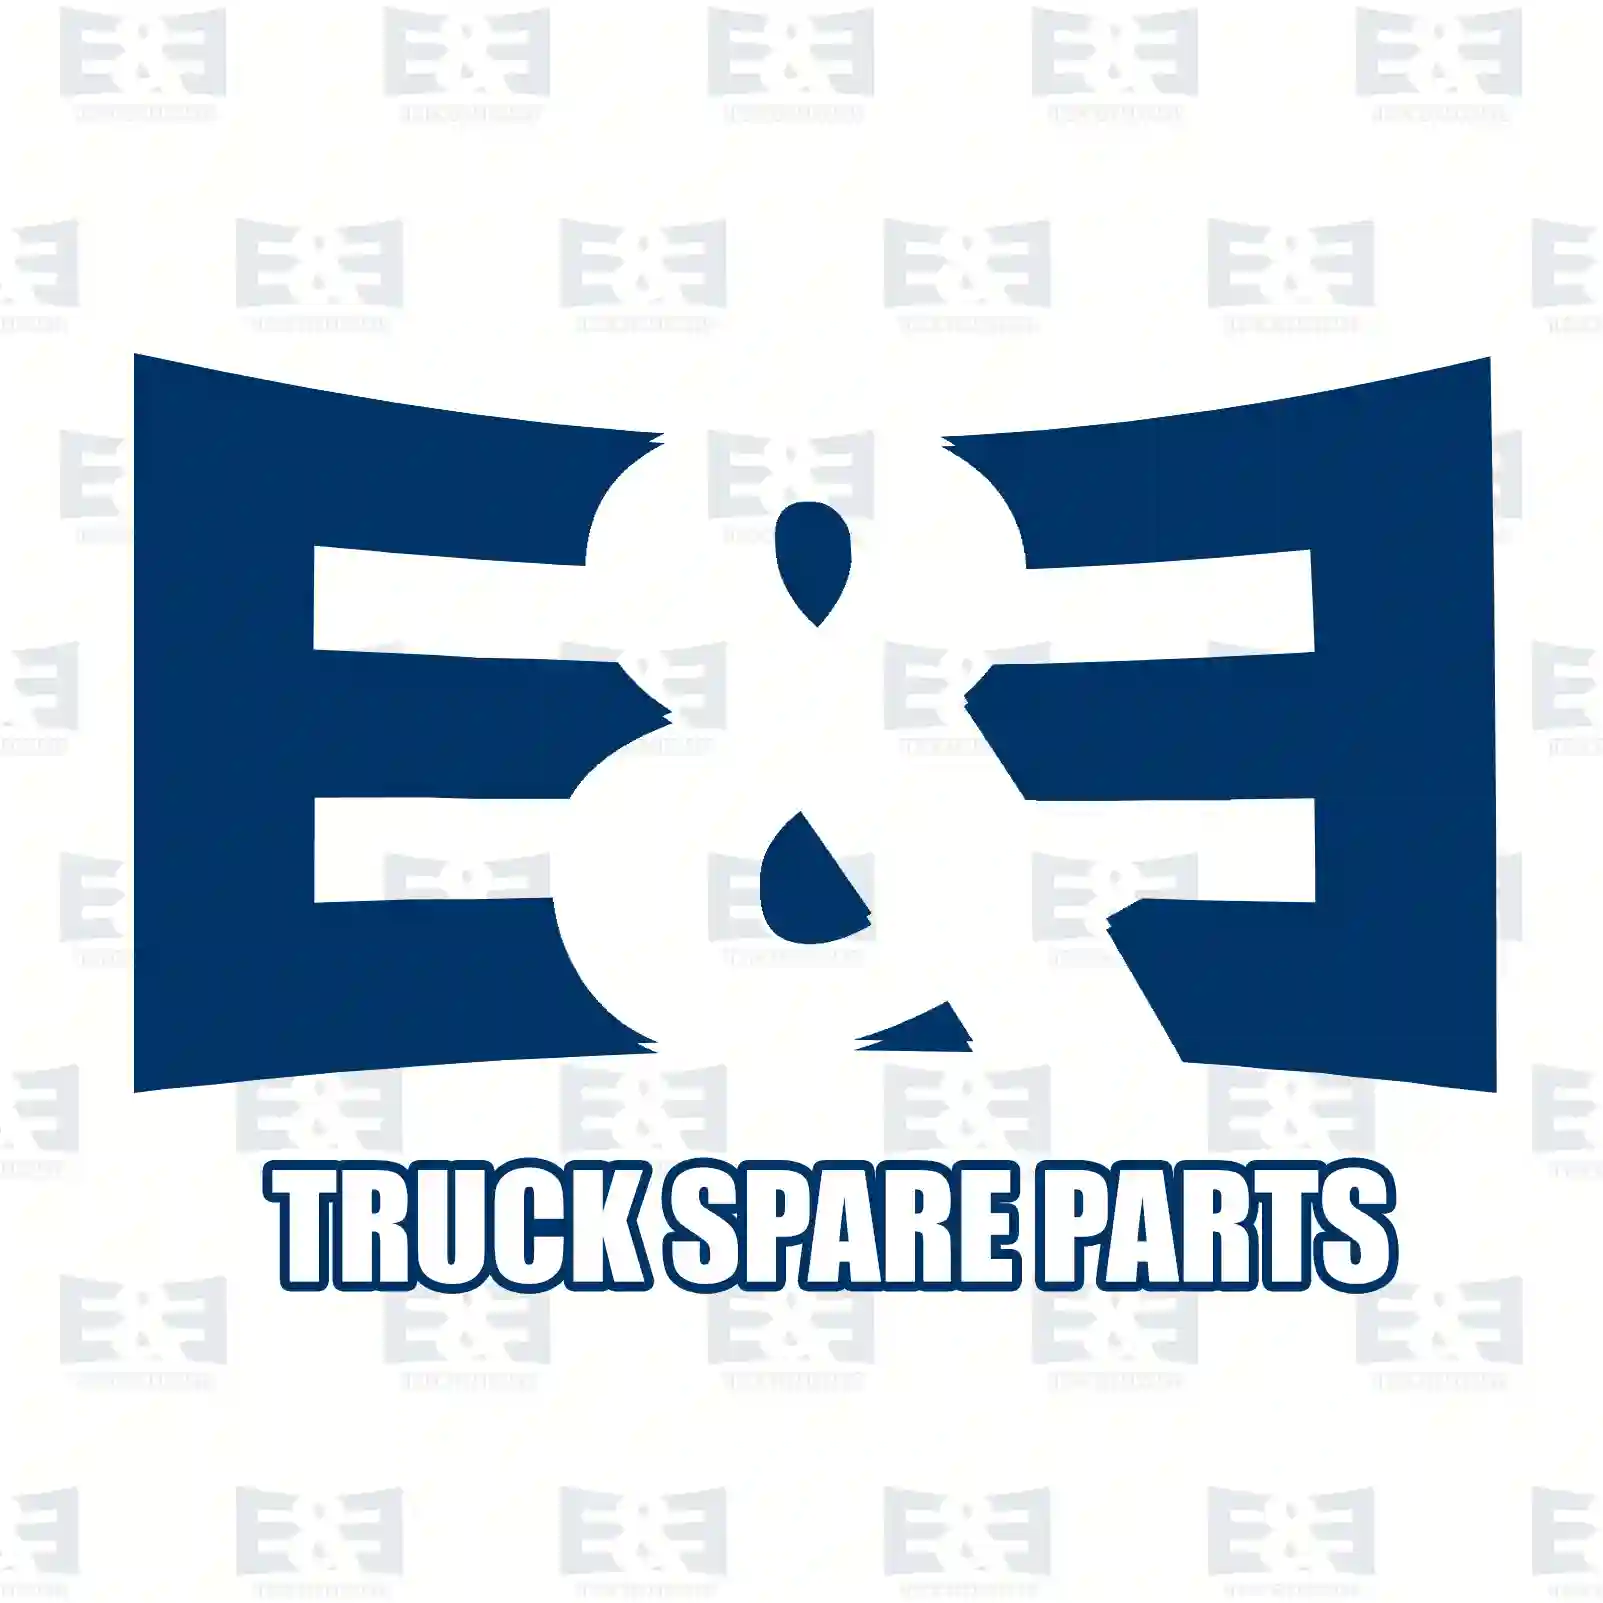 Control Arm Ball joint, control arm, EE No 2E2270650 ,  oem no:364054, 1331641080, 364054, ZG40341-0008 E&E Truck Spare Parts | Truck Spare Parts, Auotomotive Spare Parts